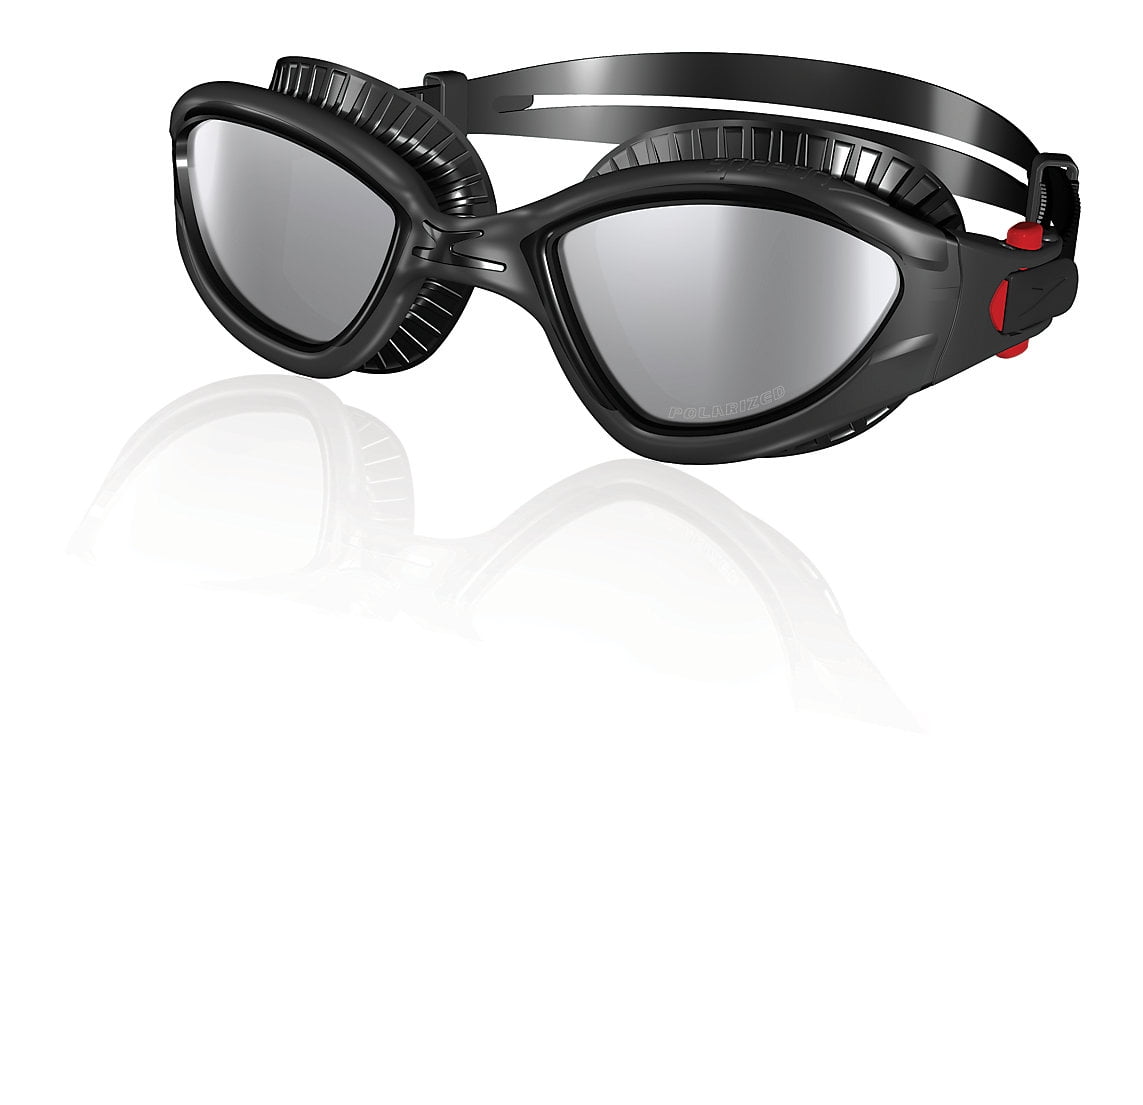 Speedo Fitness MDR 2.4 Swim Swimming Speed Fit Polarized Lenses Goggles, Black